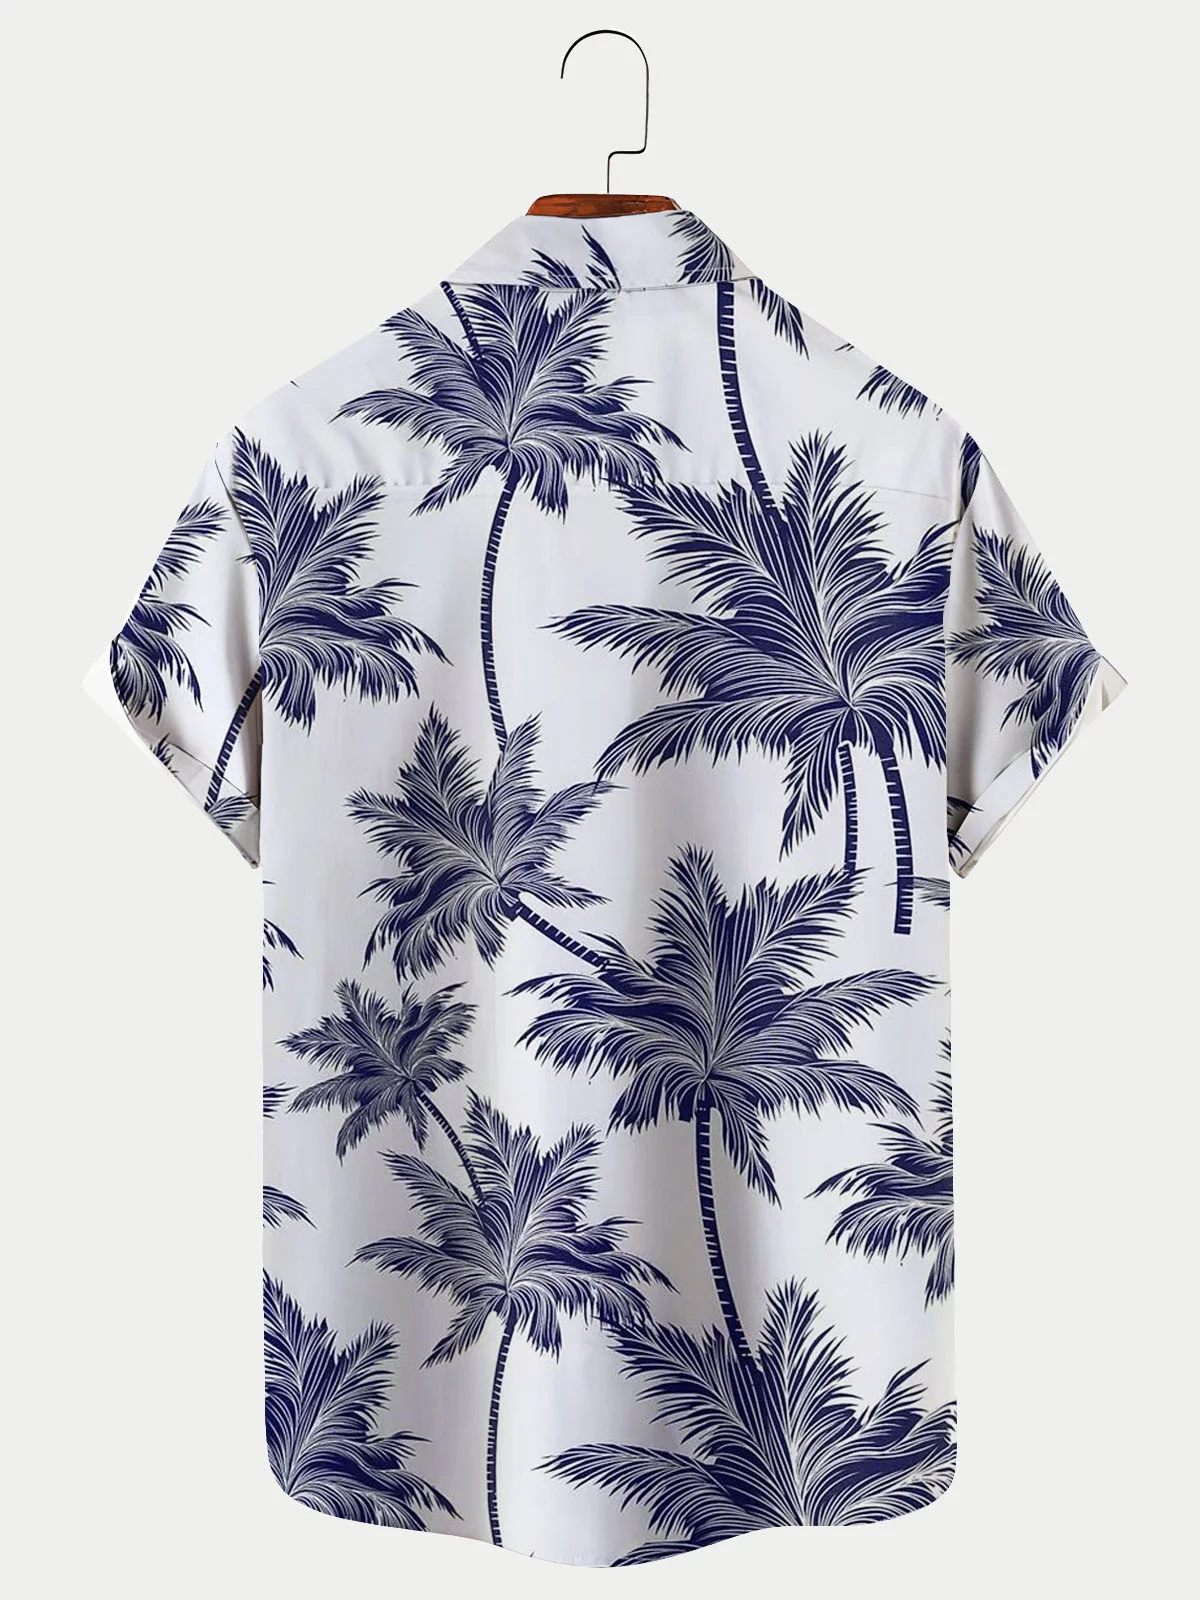 Royaura Random Palm Tree Print Men's Hawaiian Short Shirt Breathable Plus Size Shirt